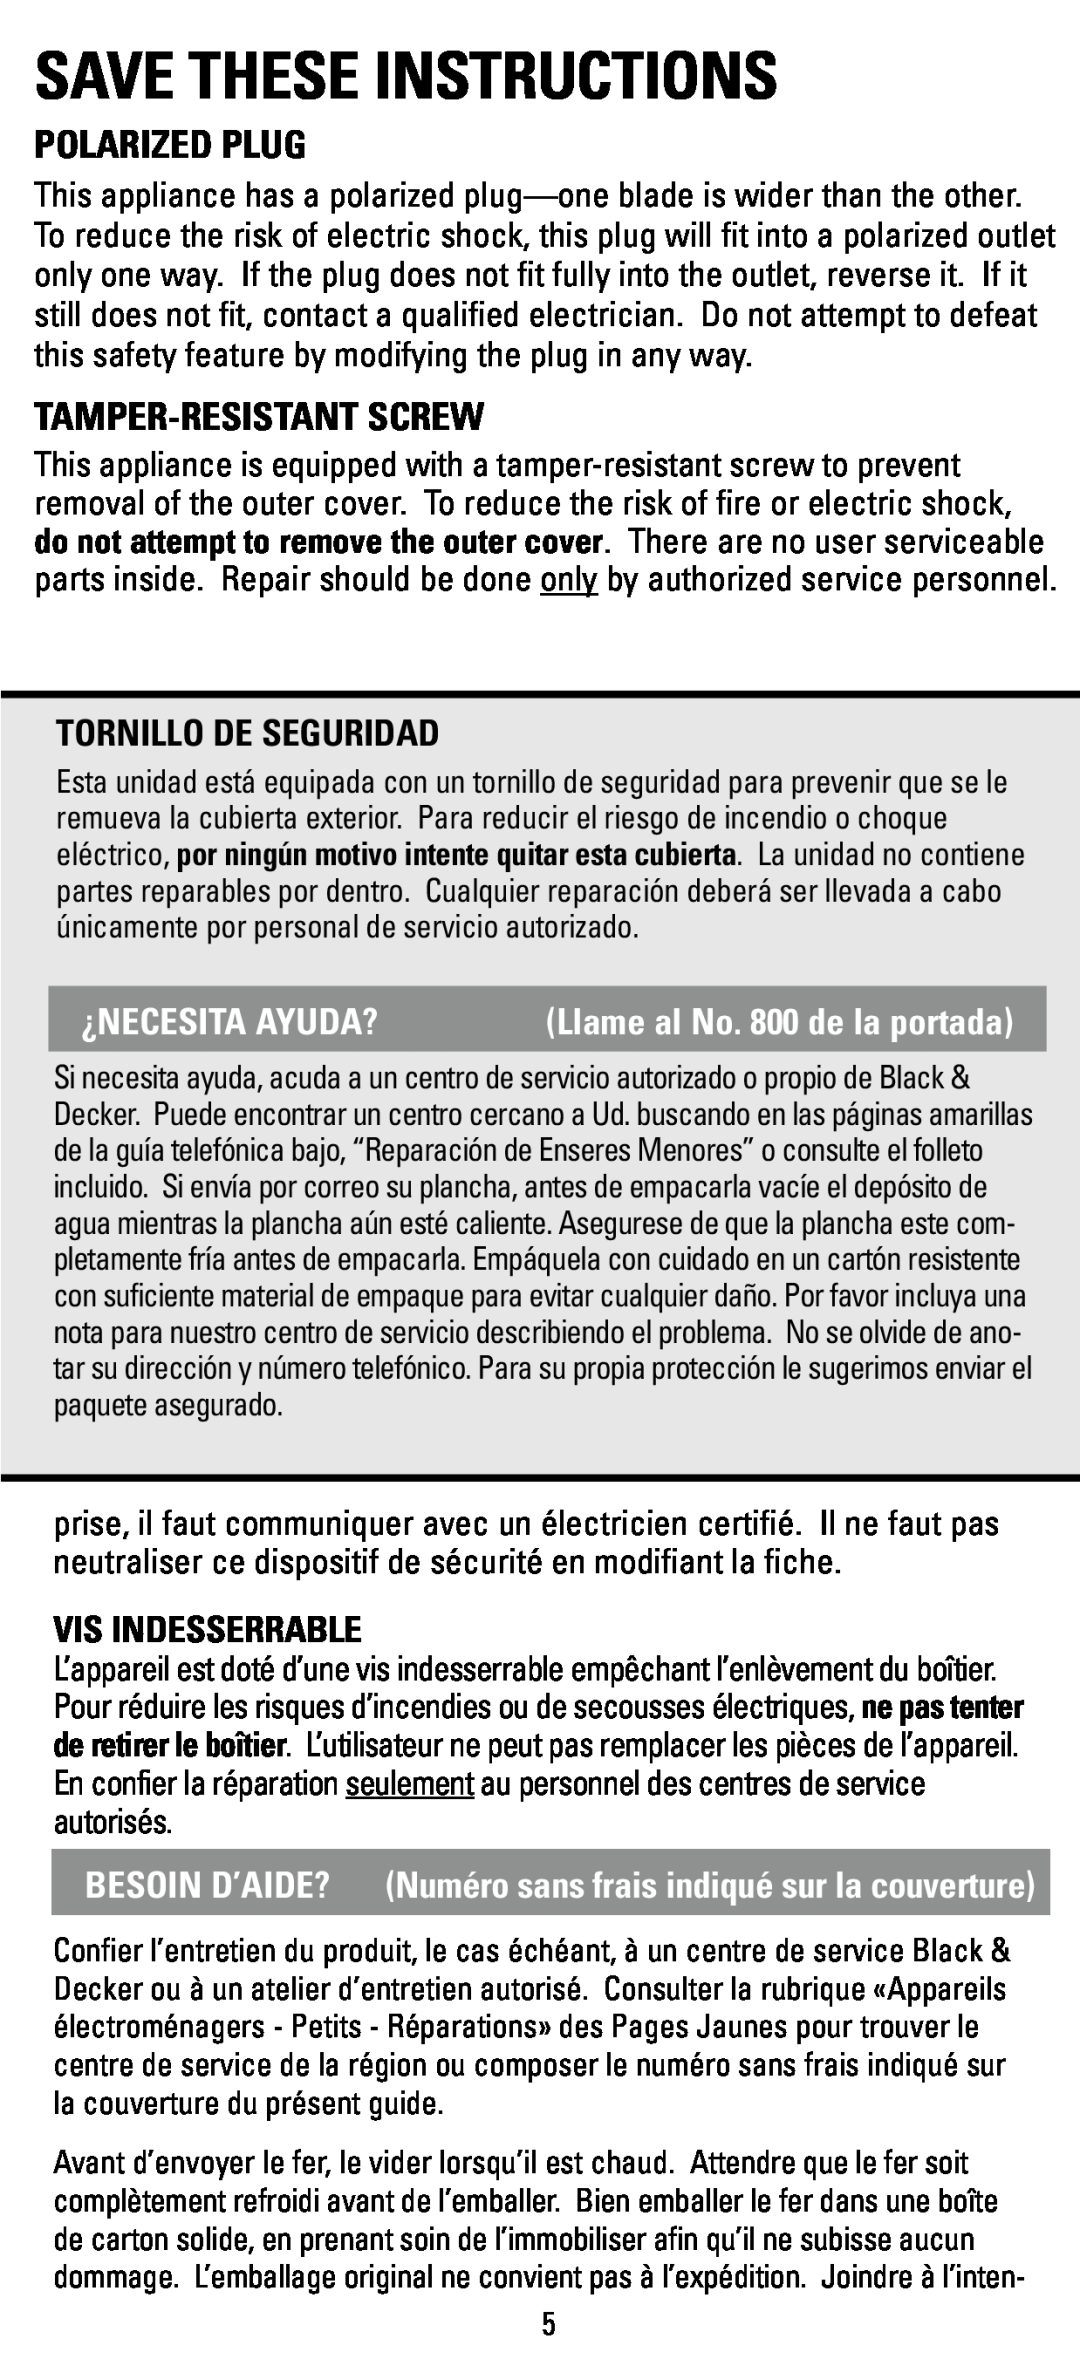 Black & Decker F63D manual Save These Instructions, Polarized Plug, Tamper-Resistant Screw, Tornillo De Seguridad 